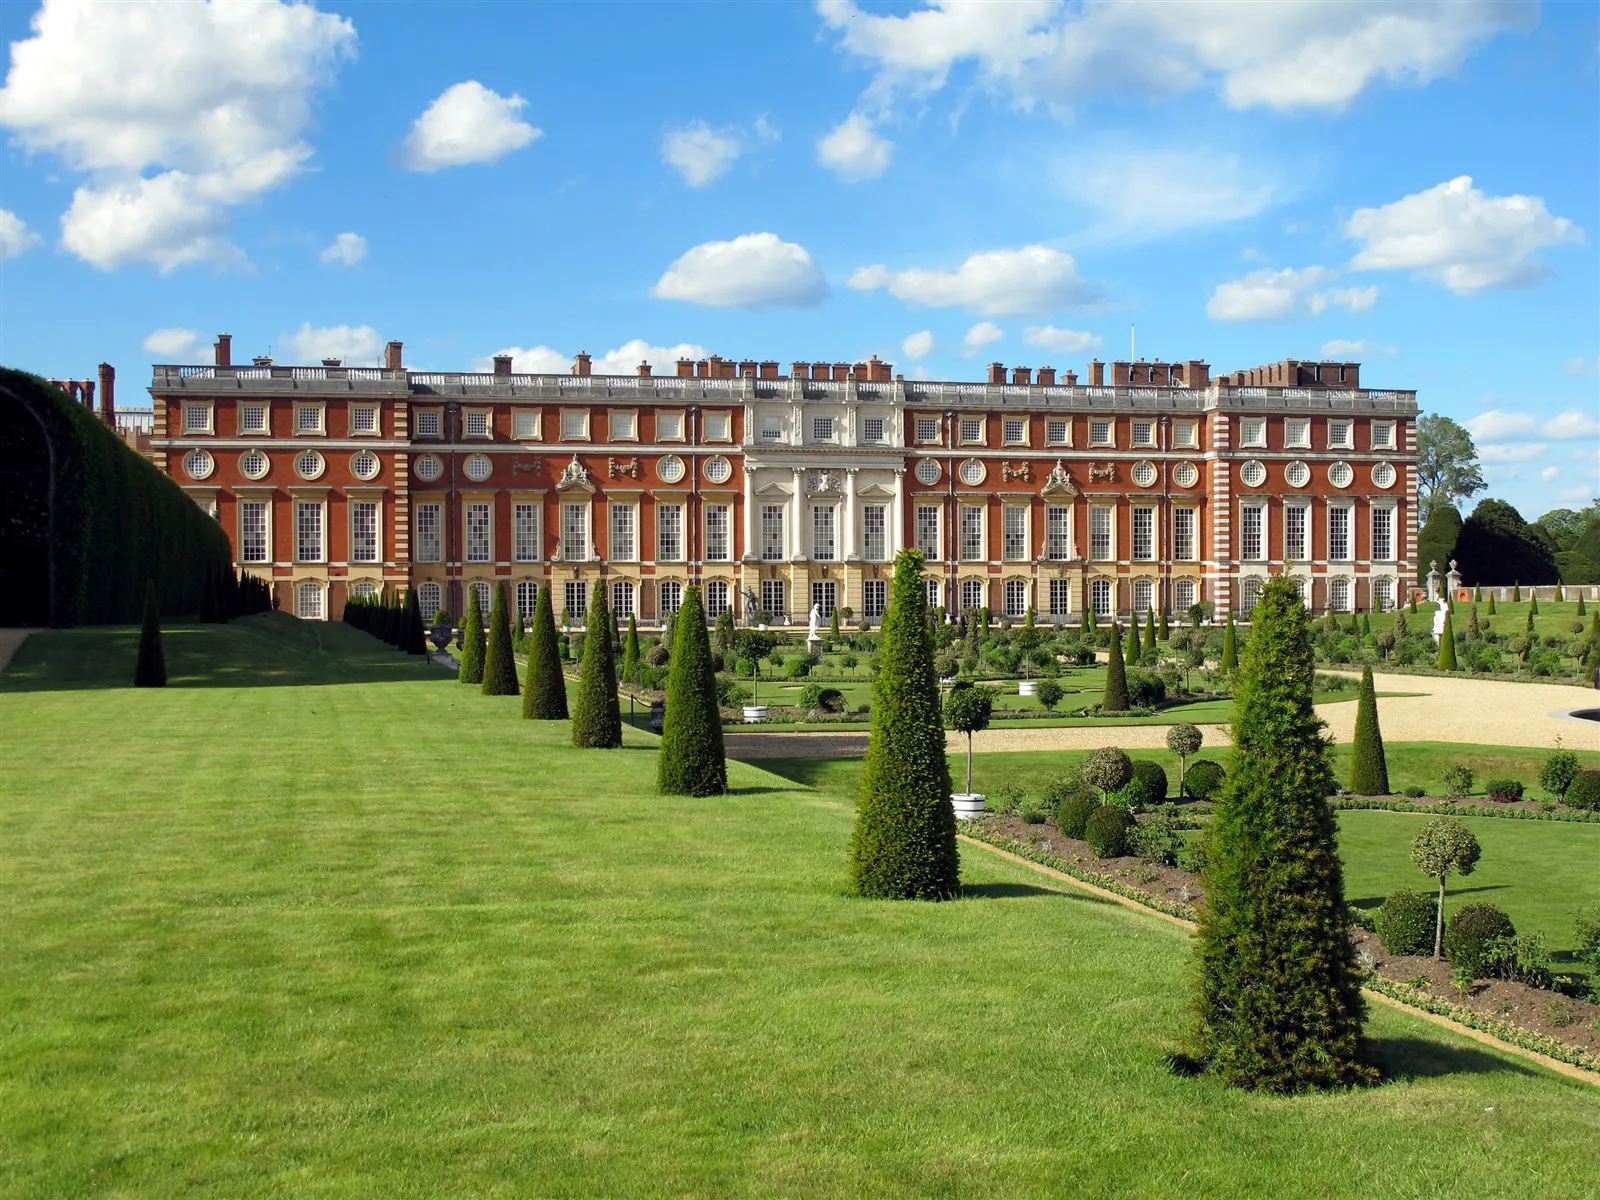 Hampton Court Palace in Surrey